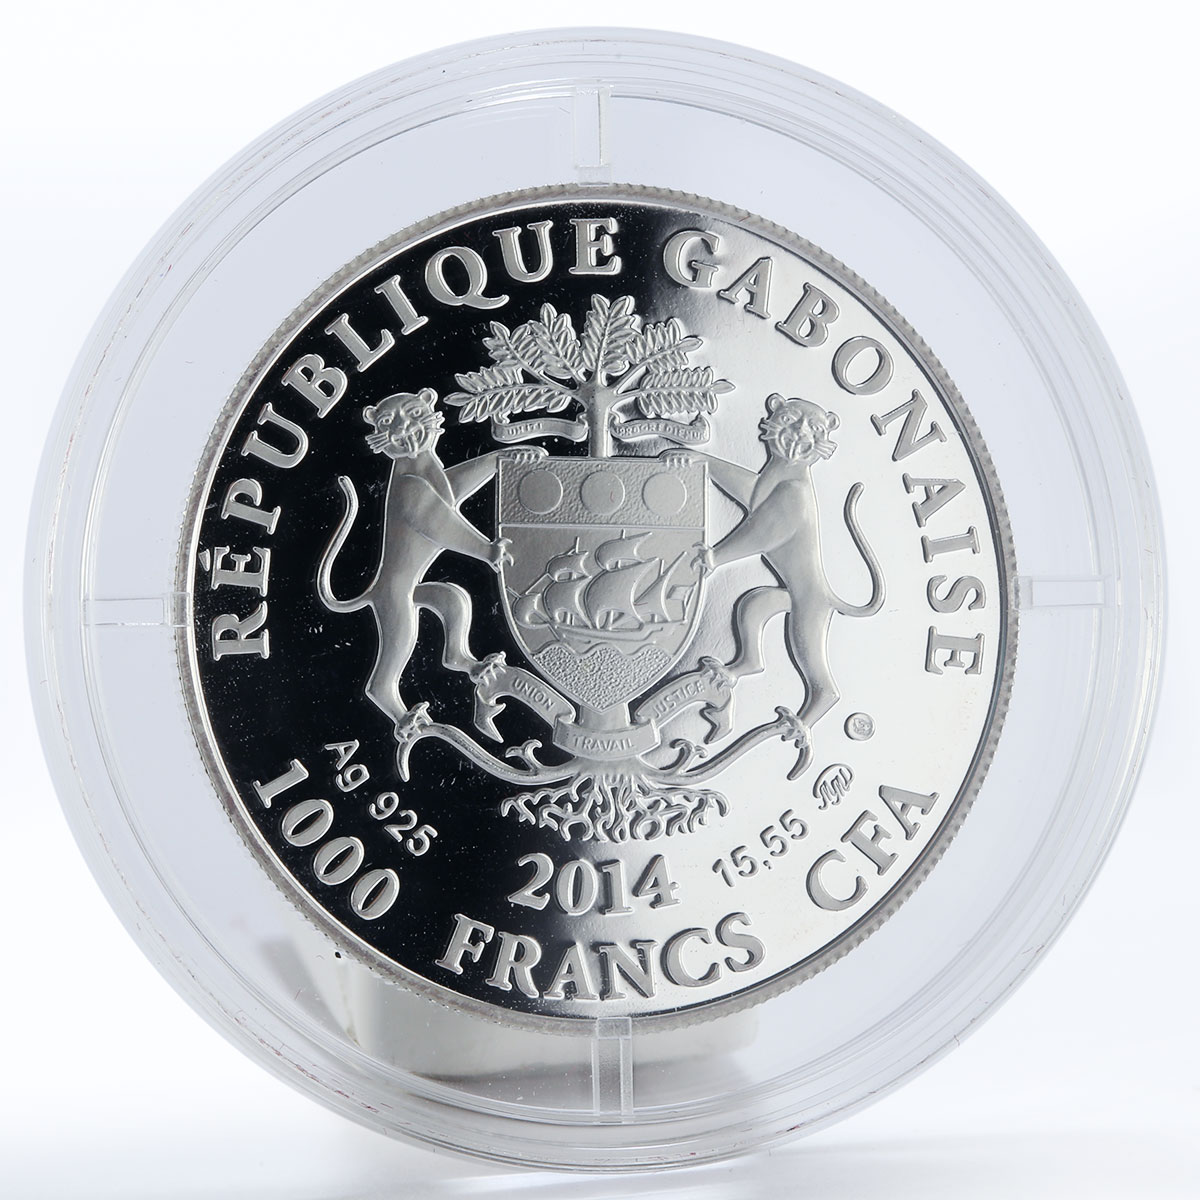 Gabon 1000 francs Zodiac Gemini proof silver coin 2014